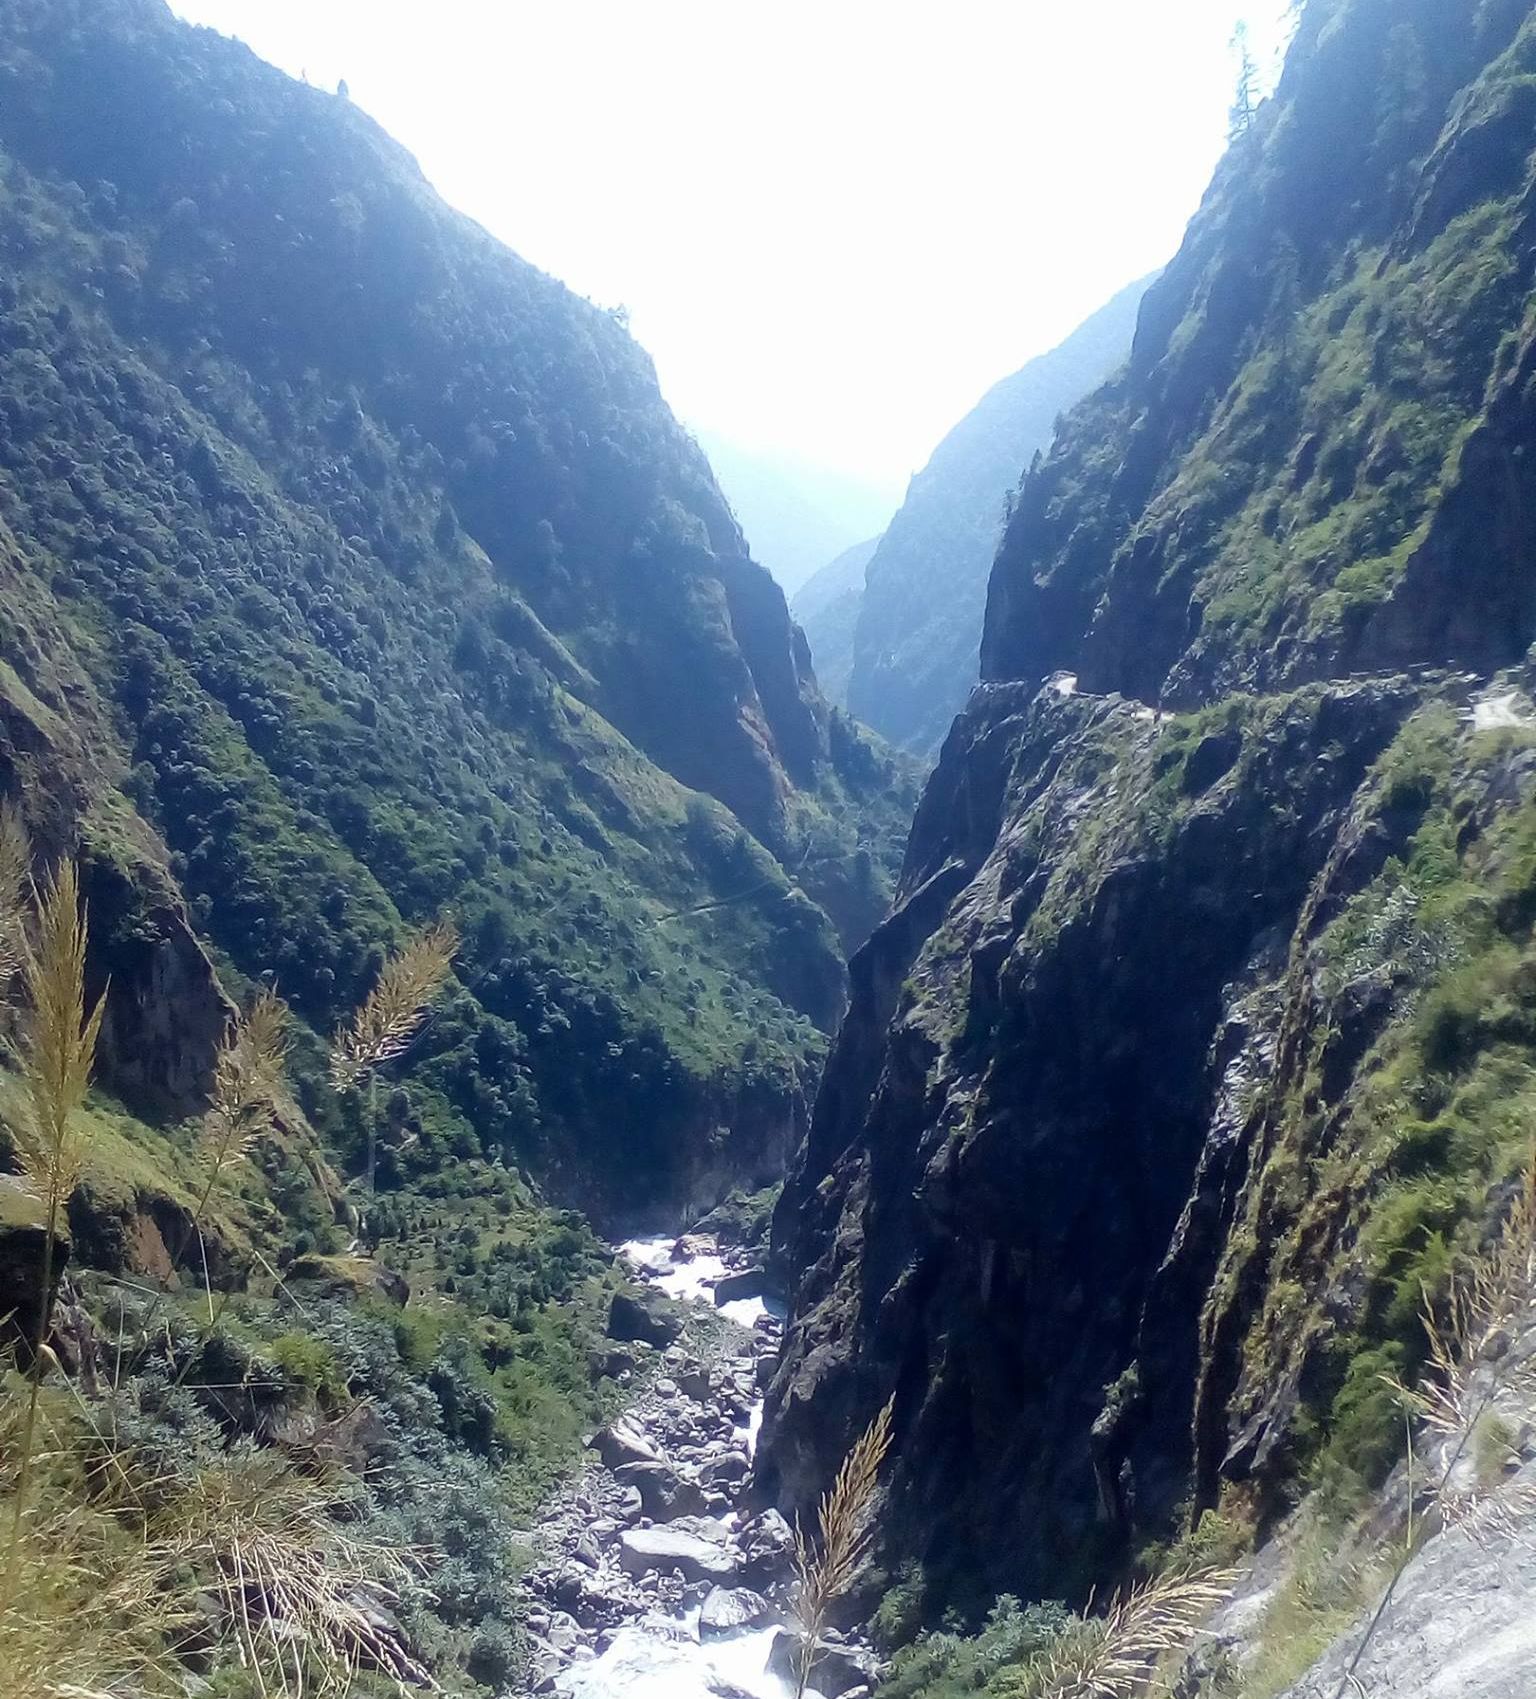 Marsayangdi Khola Valley on Annapurna Circuit